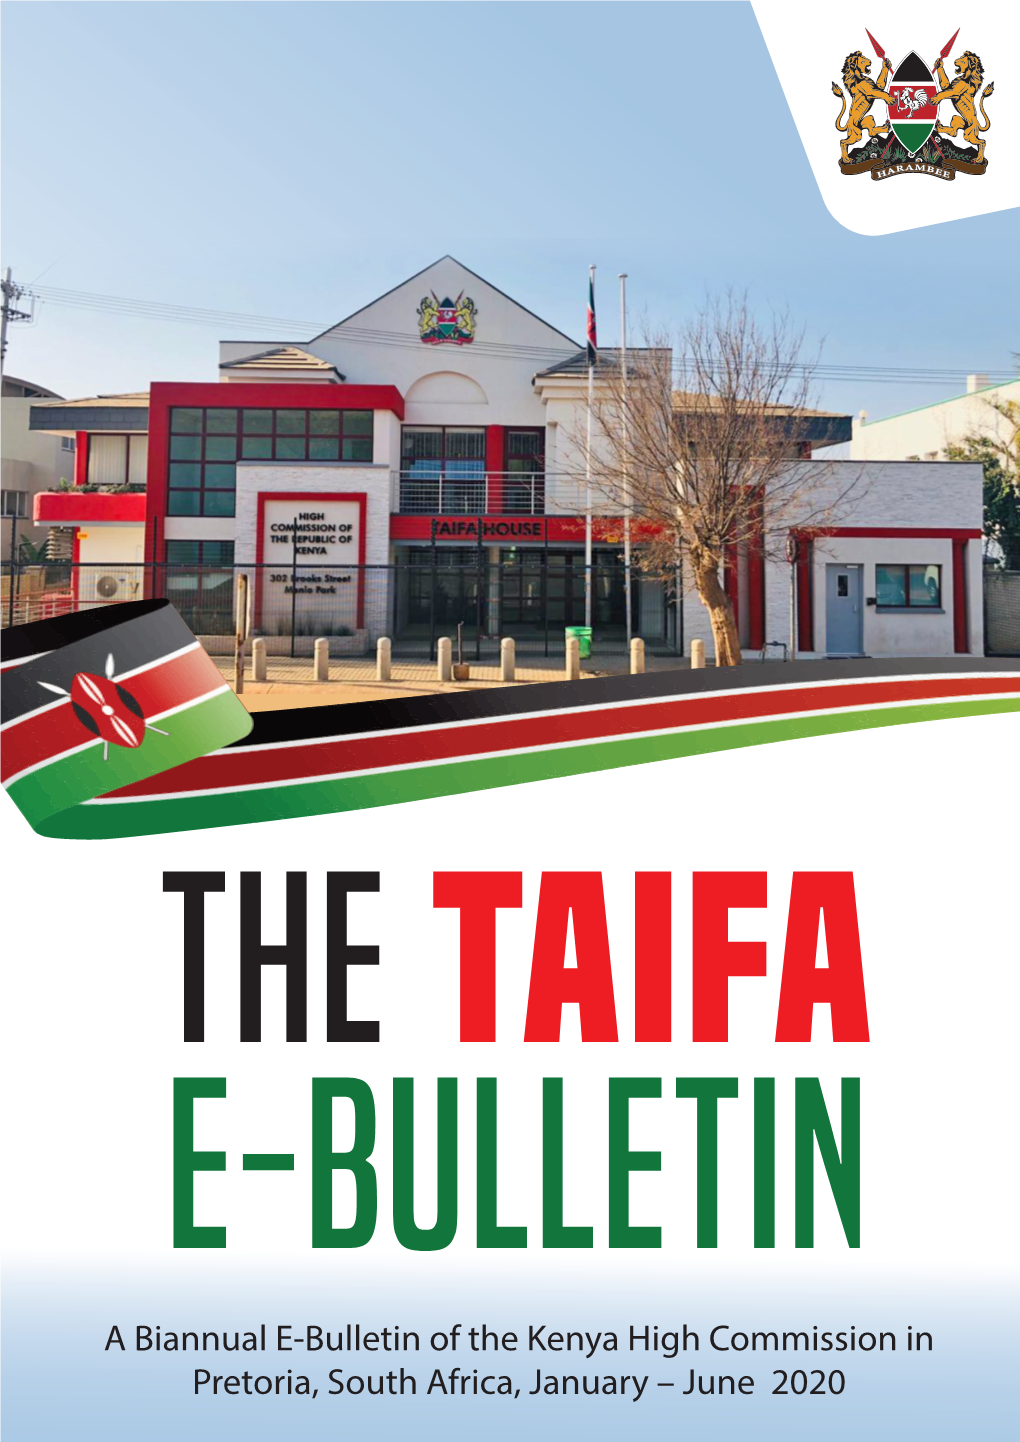 A Biannual E-Bulletin of the Kenya High Commission in Pretoria, South